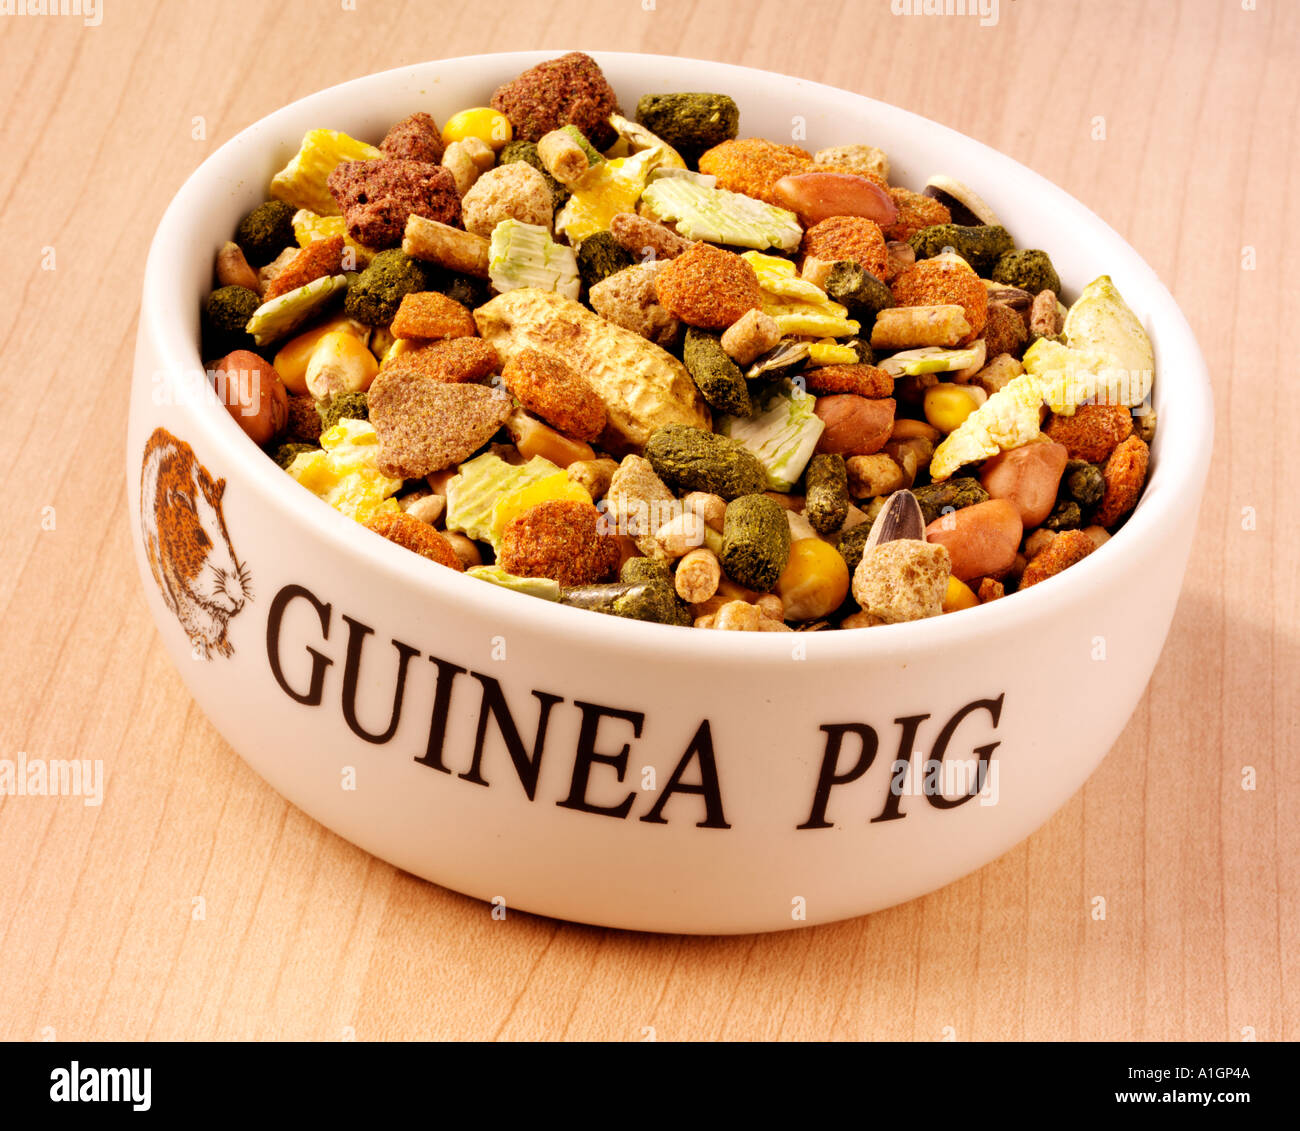 guinea pig food dish